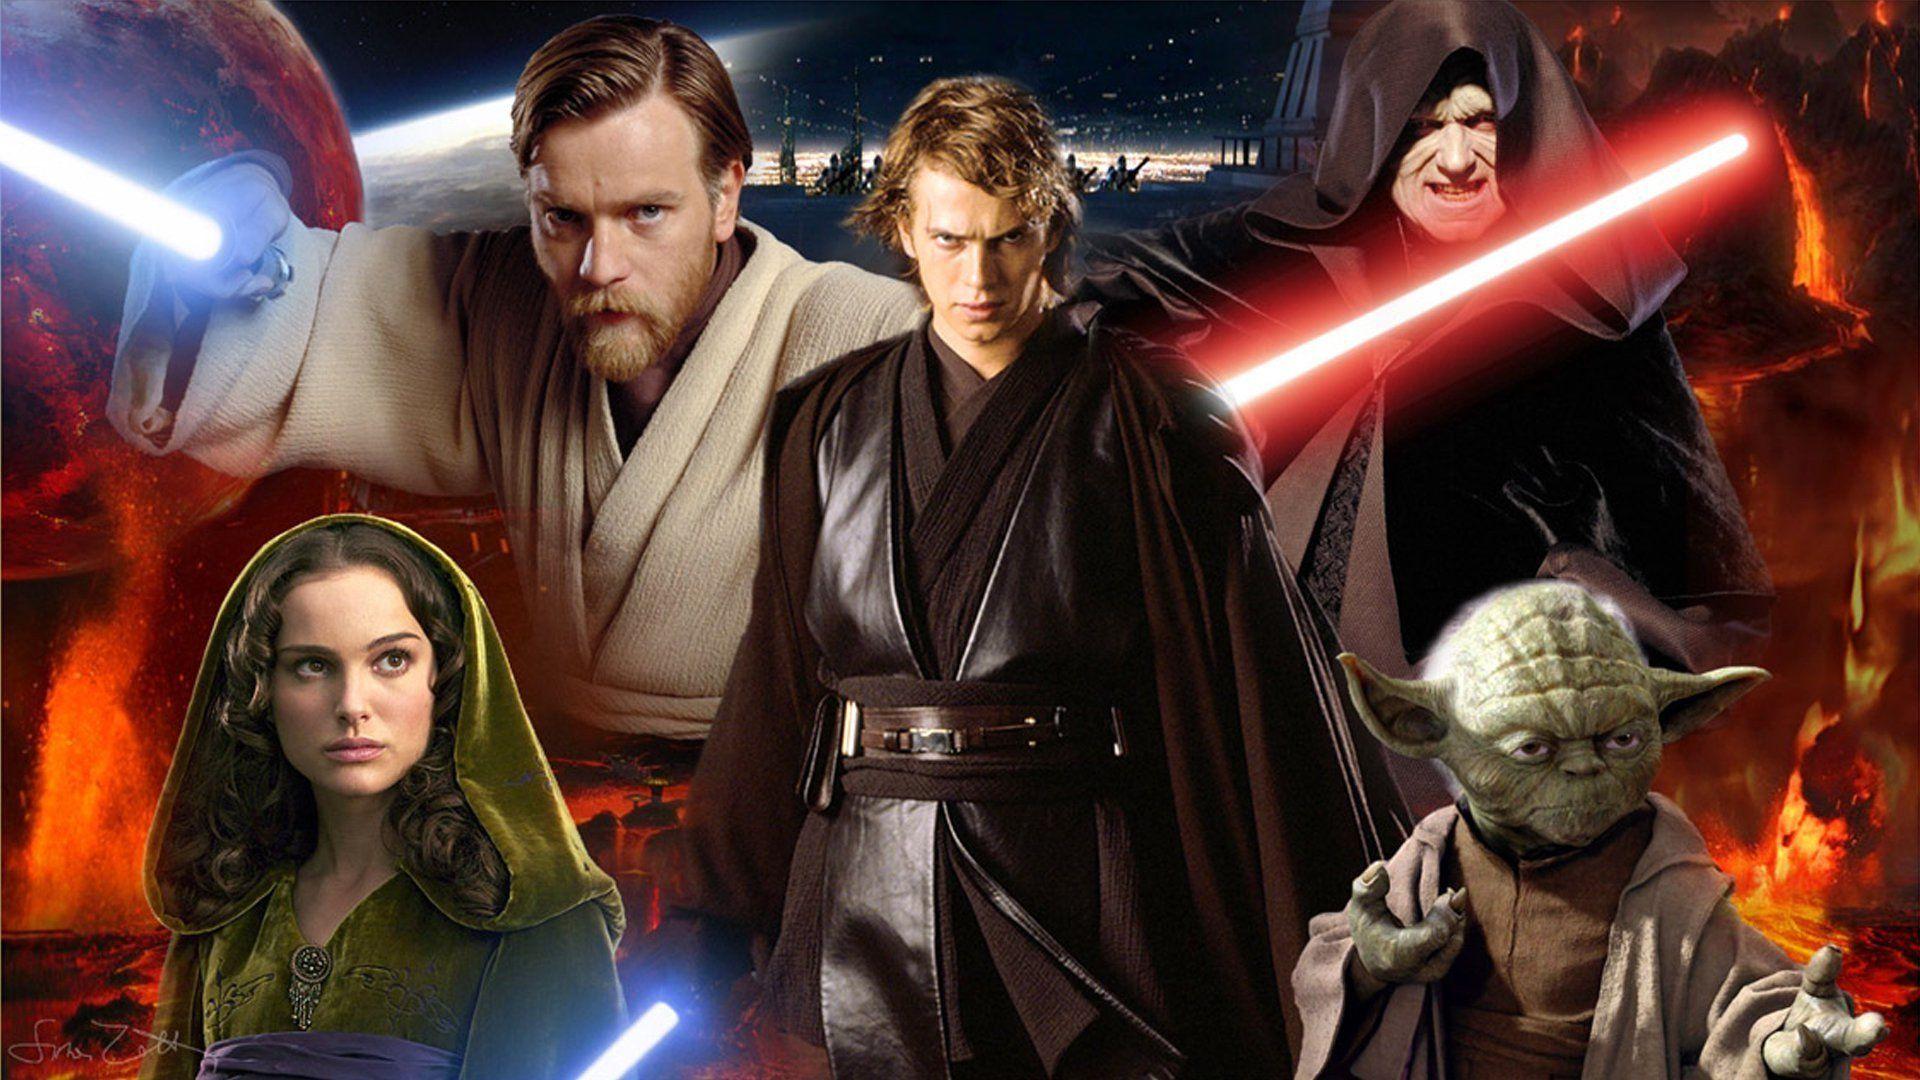 Star Wars Episode III: Revenge of the Sith HD Wallpaper